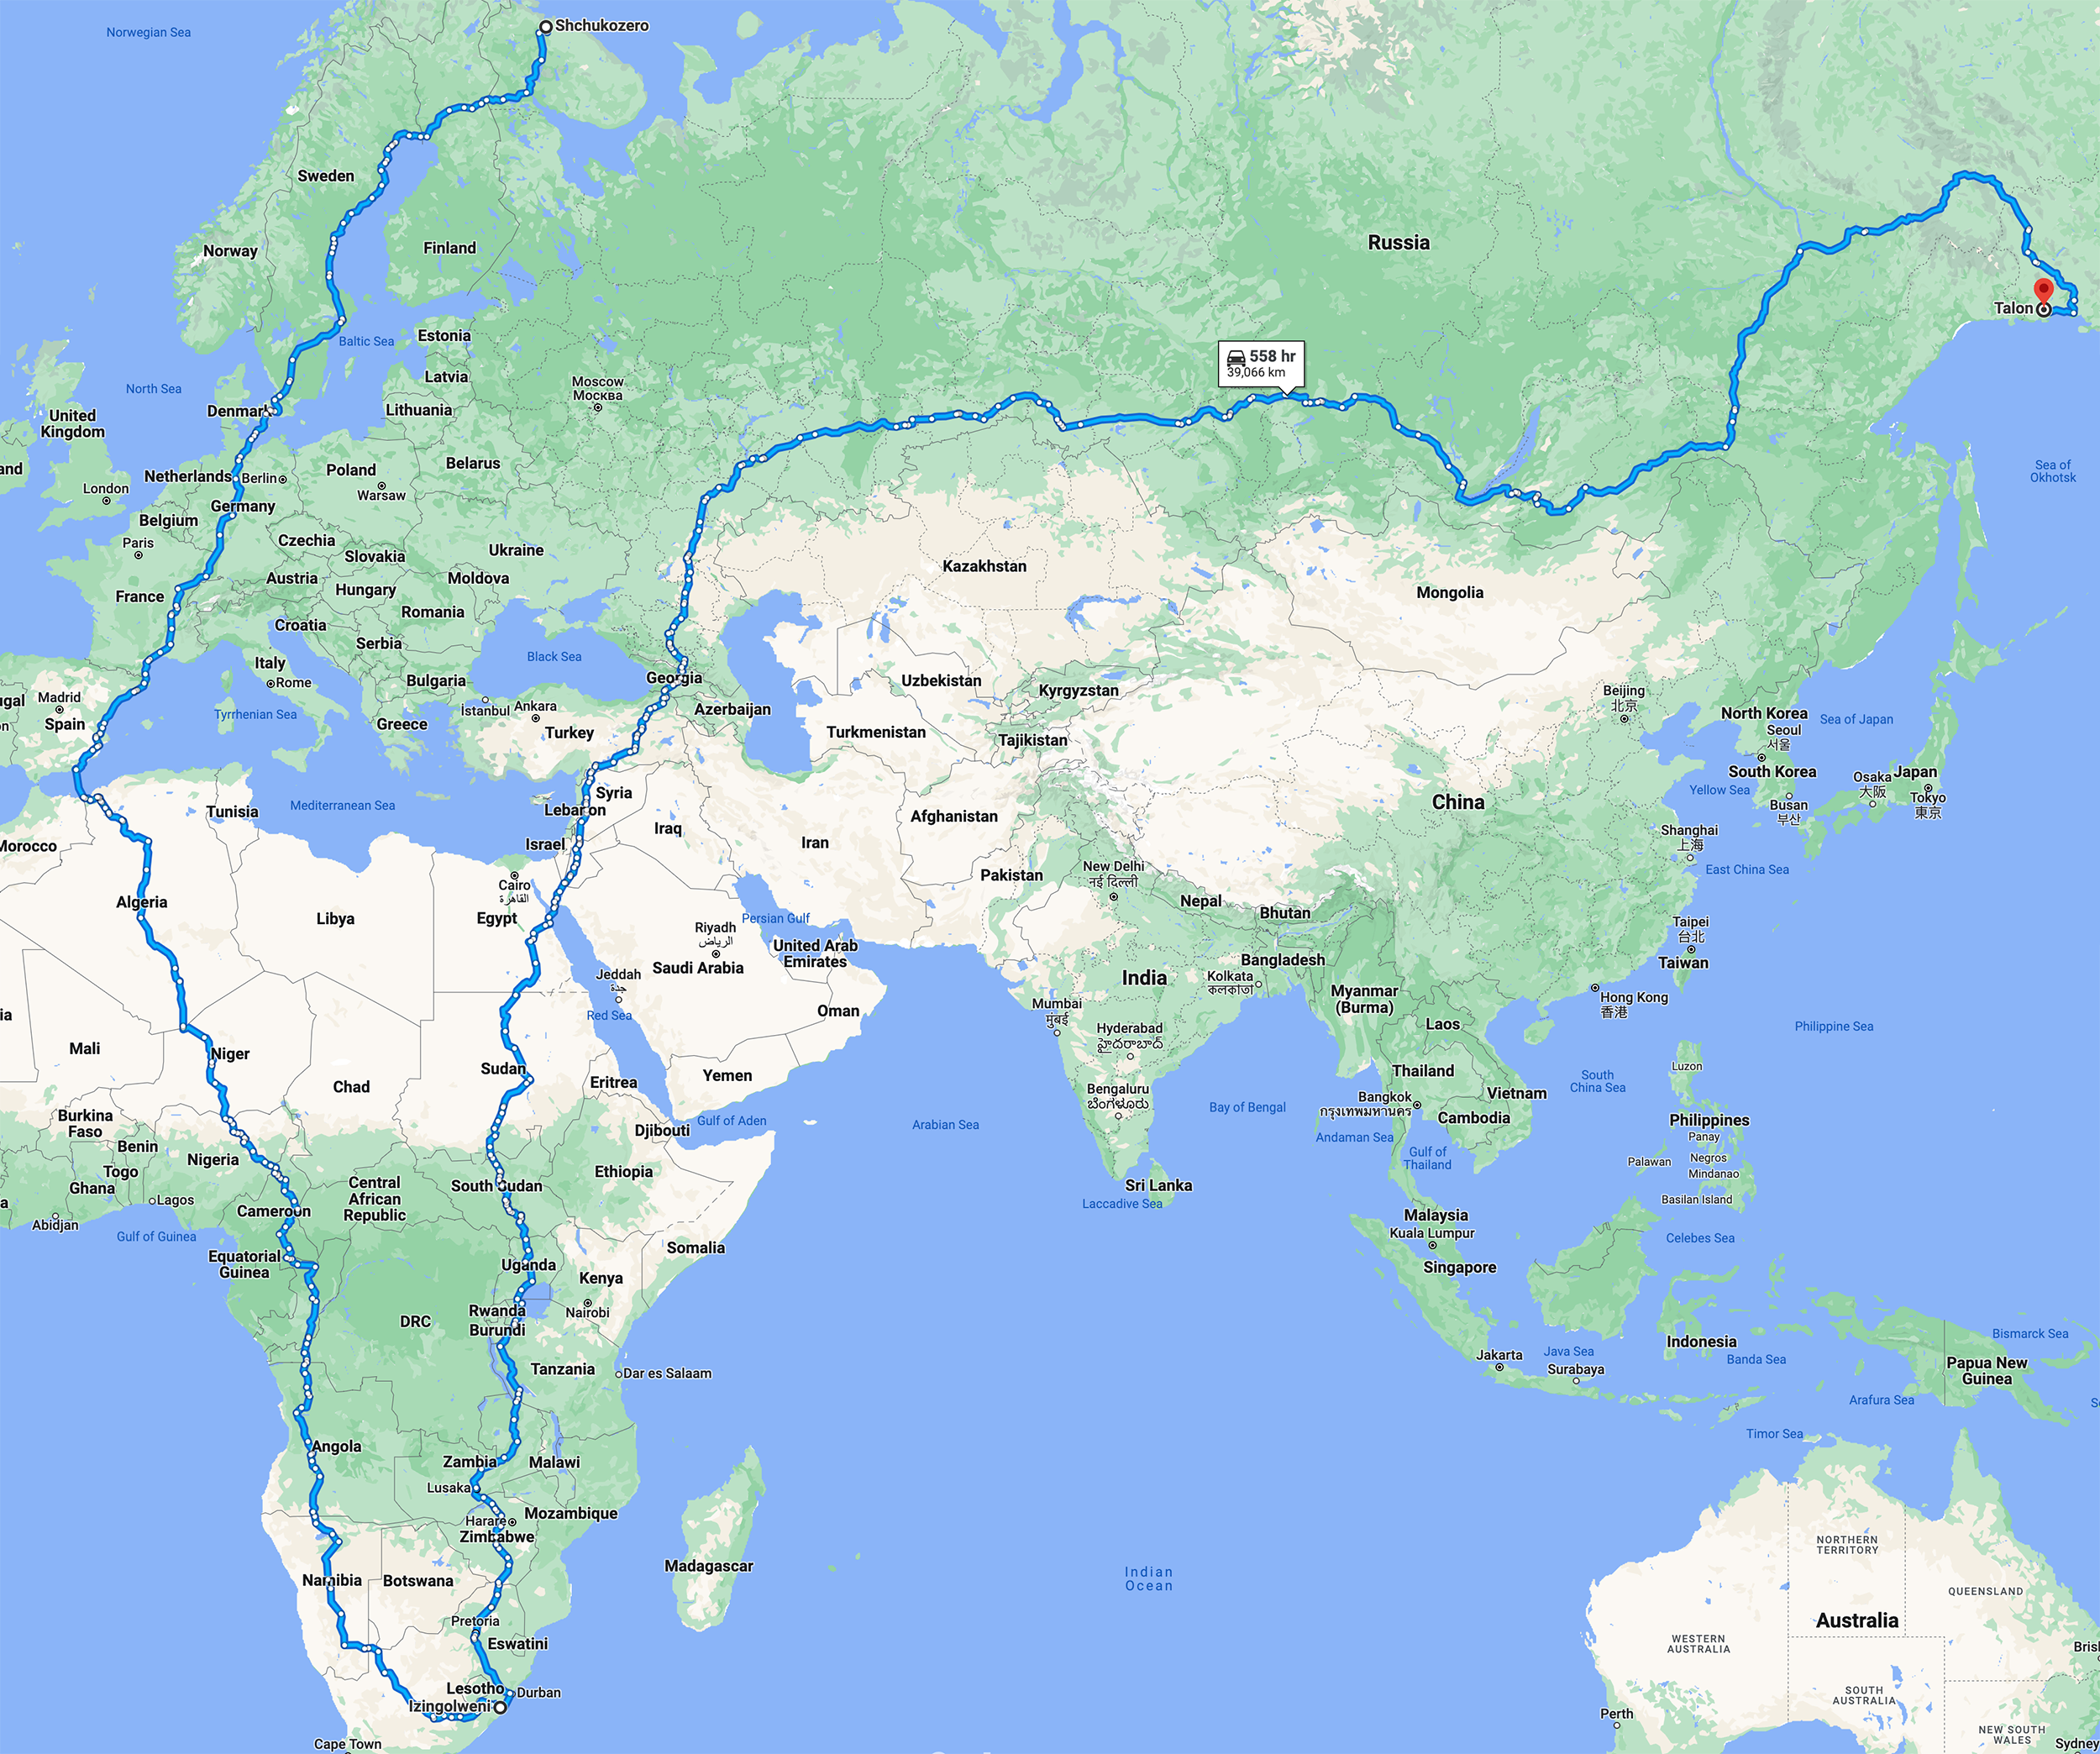 Martin Krzywinski - Longest Google Maps Route - Canada's Michael Smith  Genome Sciences Centre